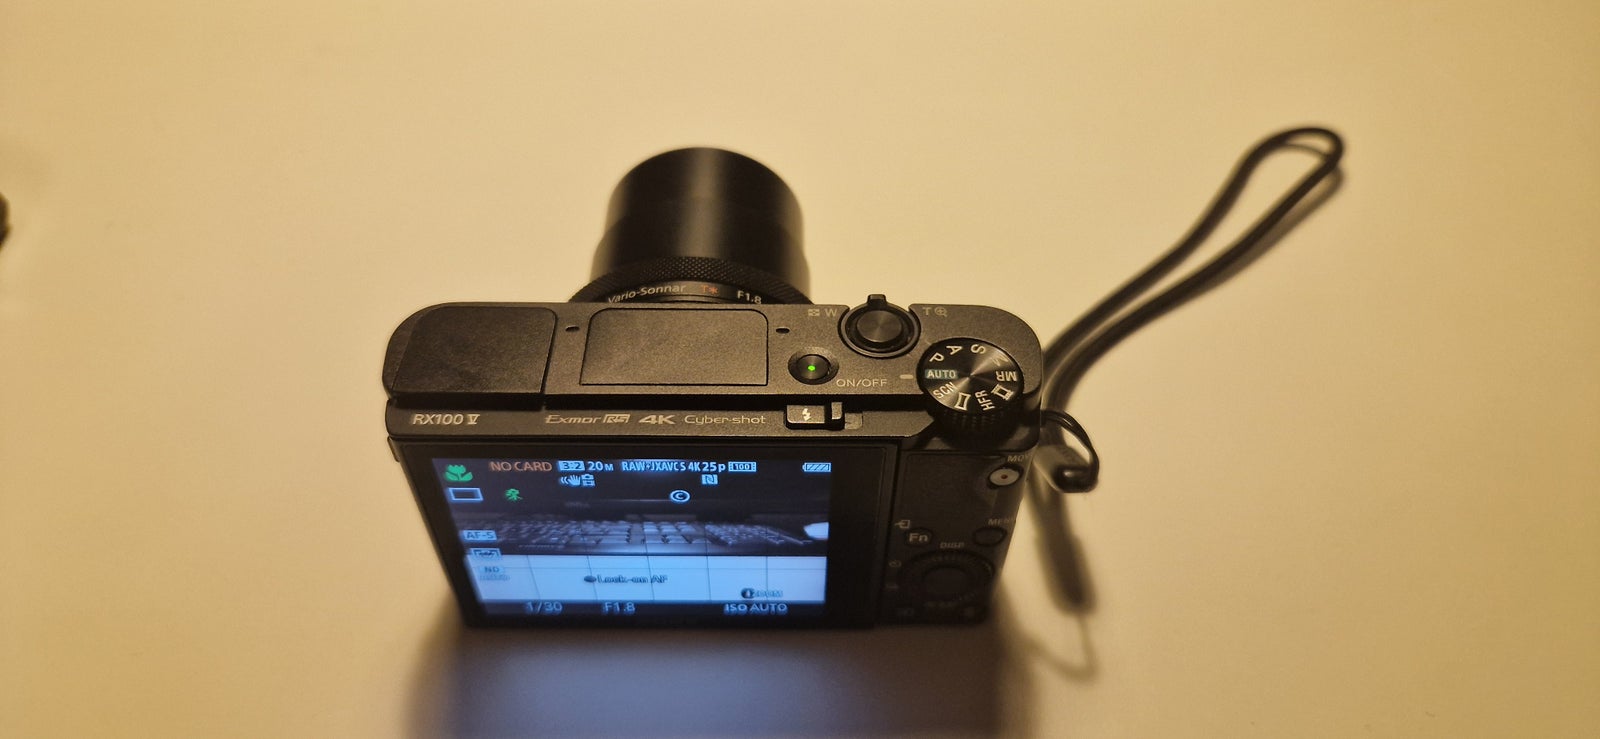 Sony, RX100 V, 20 megapixels